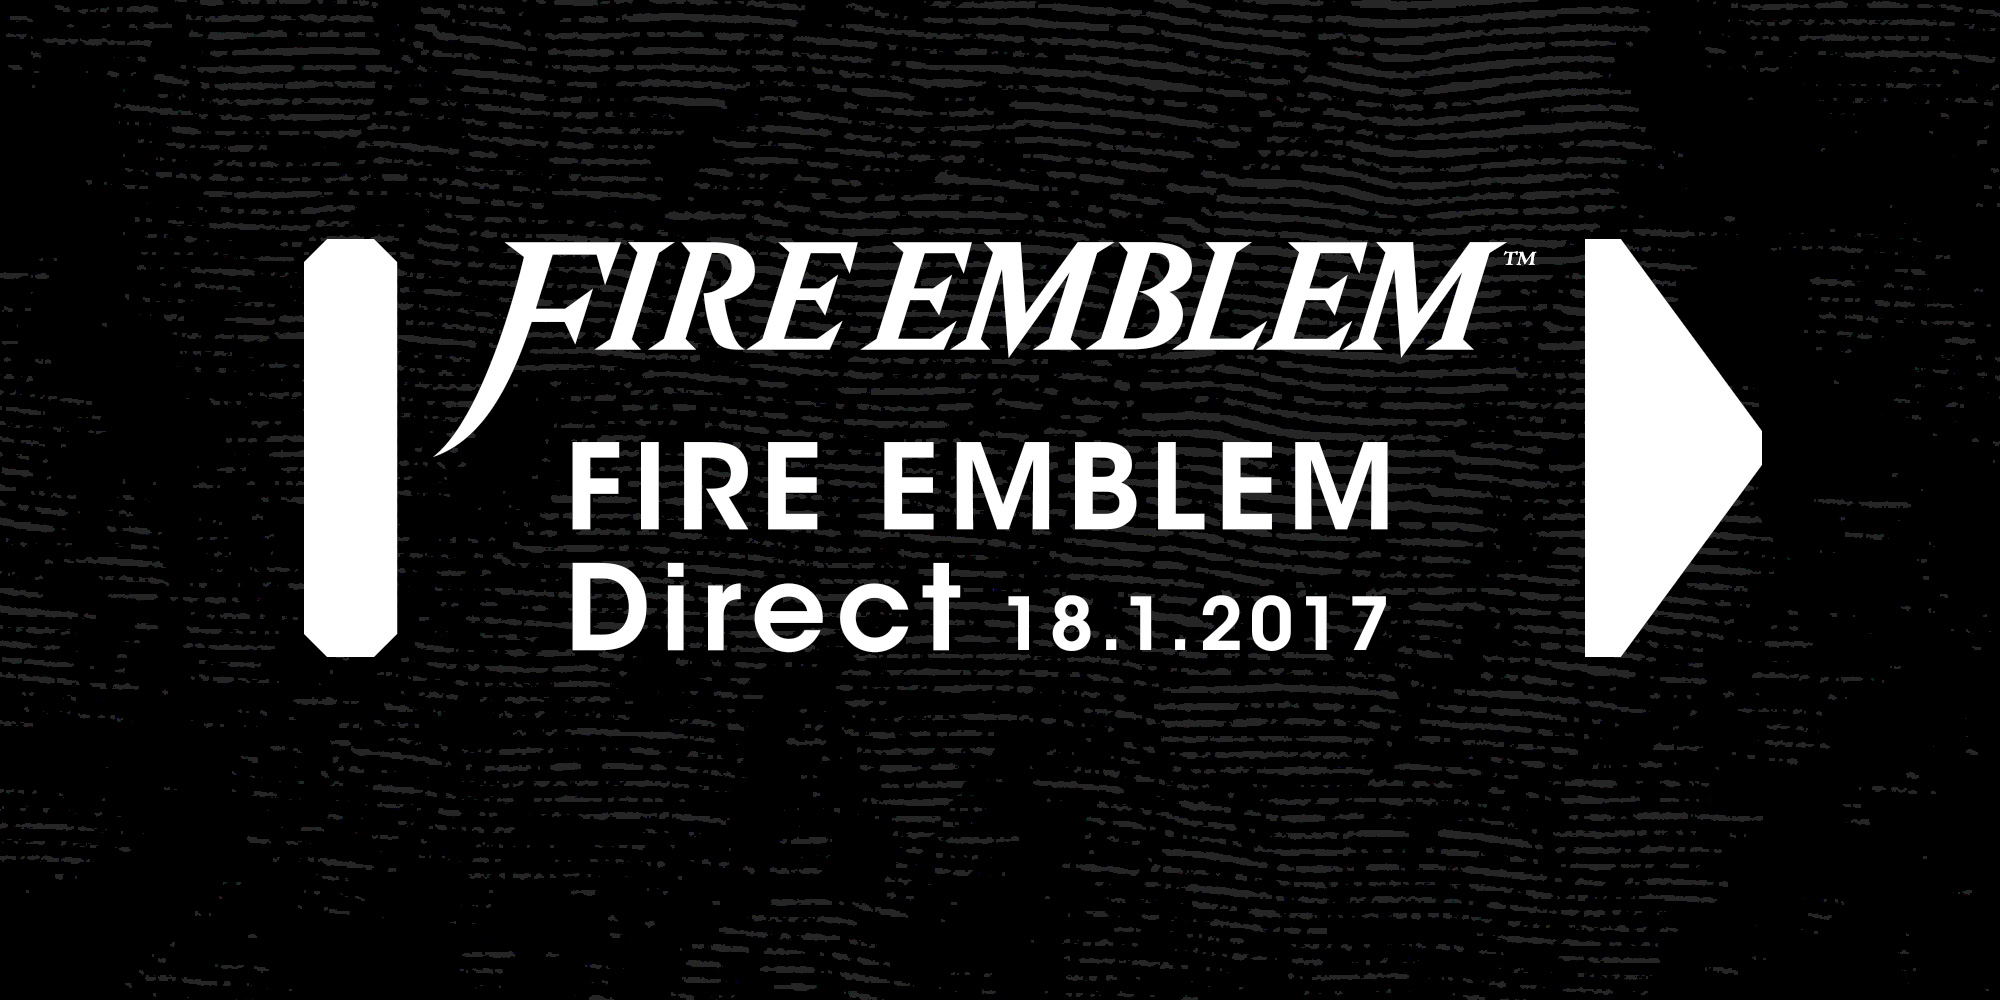 El Nintendo Direct de Fire Emblem tendrá lugar el miércoles, 18 de enero